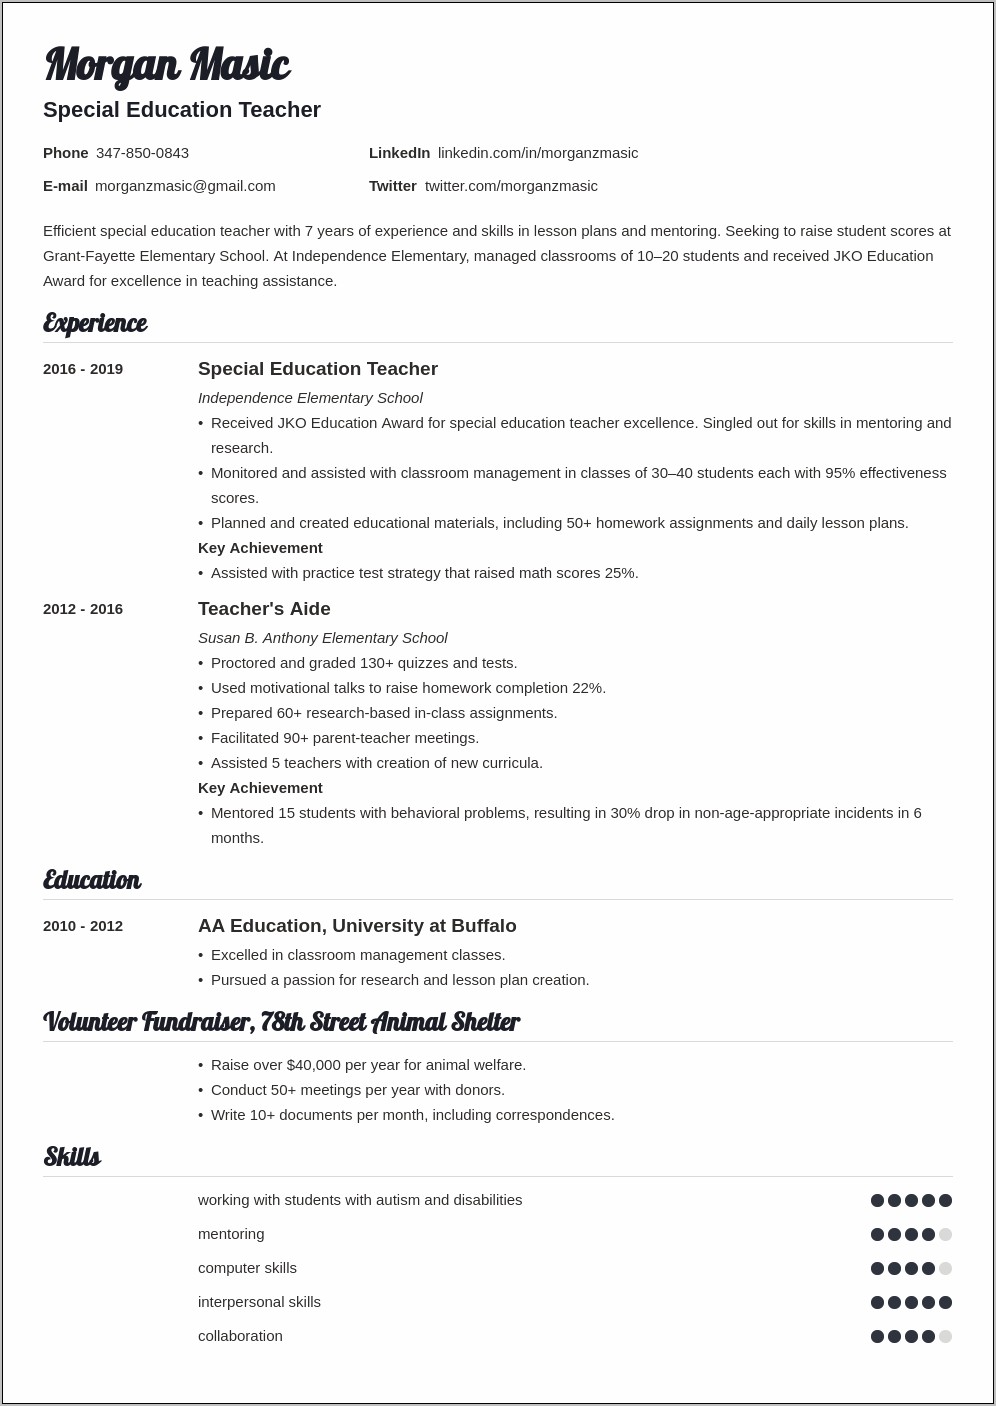 Special Education Teacher Job Description Resume